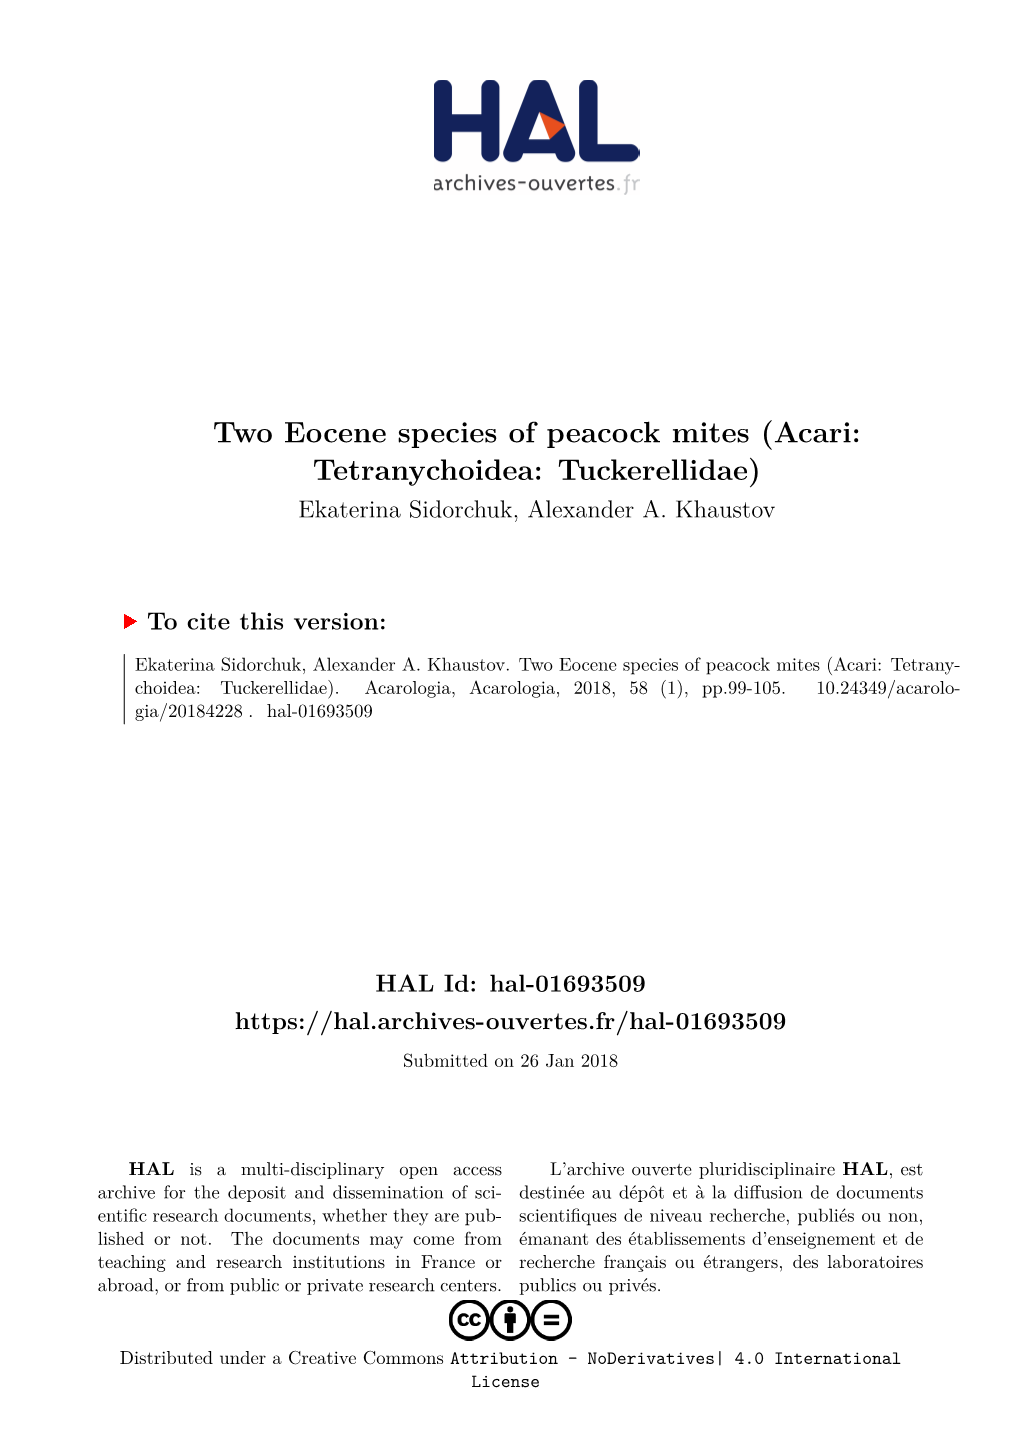 Two Eocene Species of Peacock Mites (Acari: Tetranychoidea: Tuckerellidae) Ekaterina Sidorchuk, Alexander A